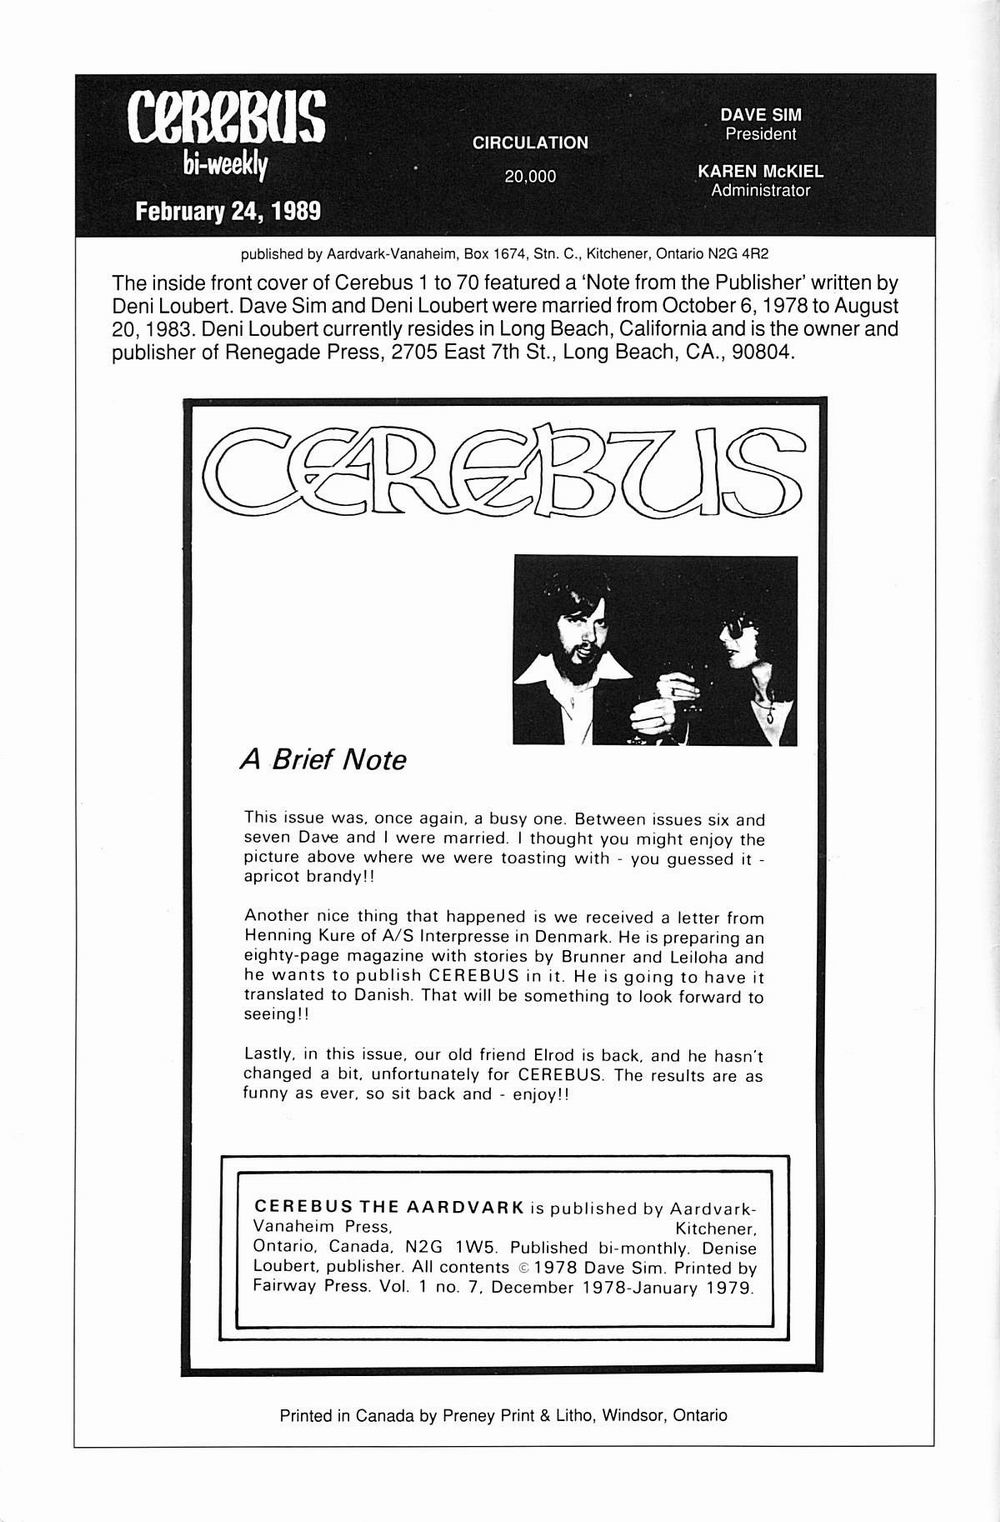 Read online Cerebus comic -  Issue #7 - 2